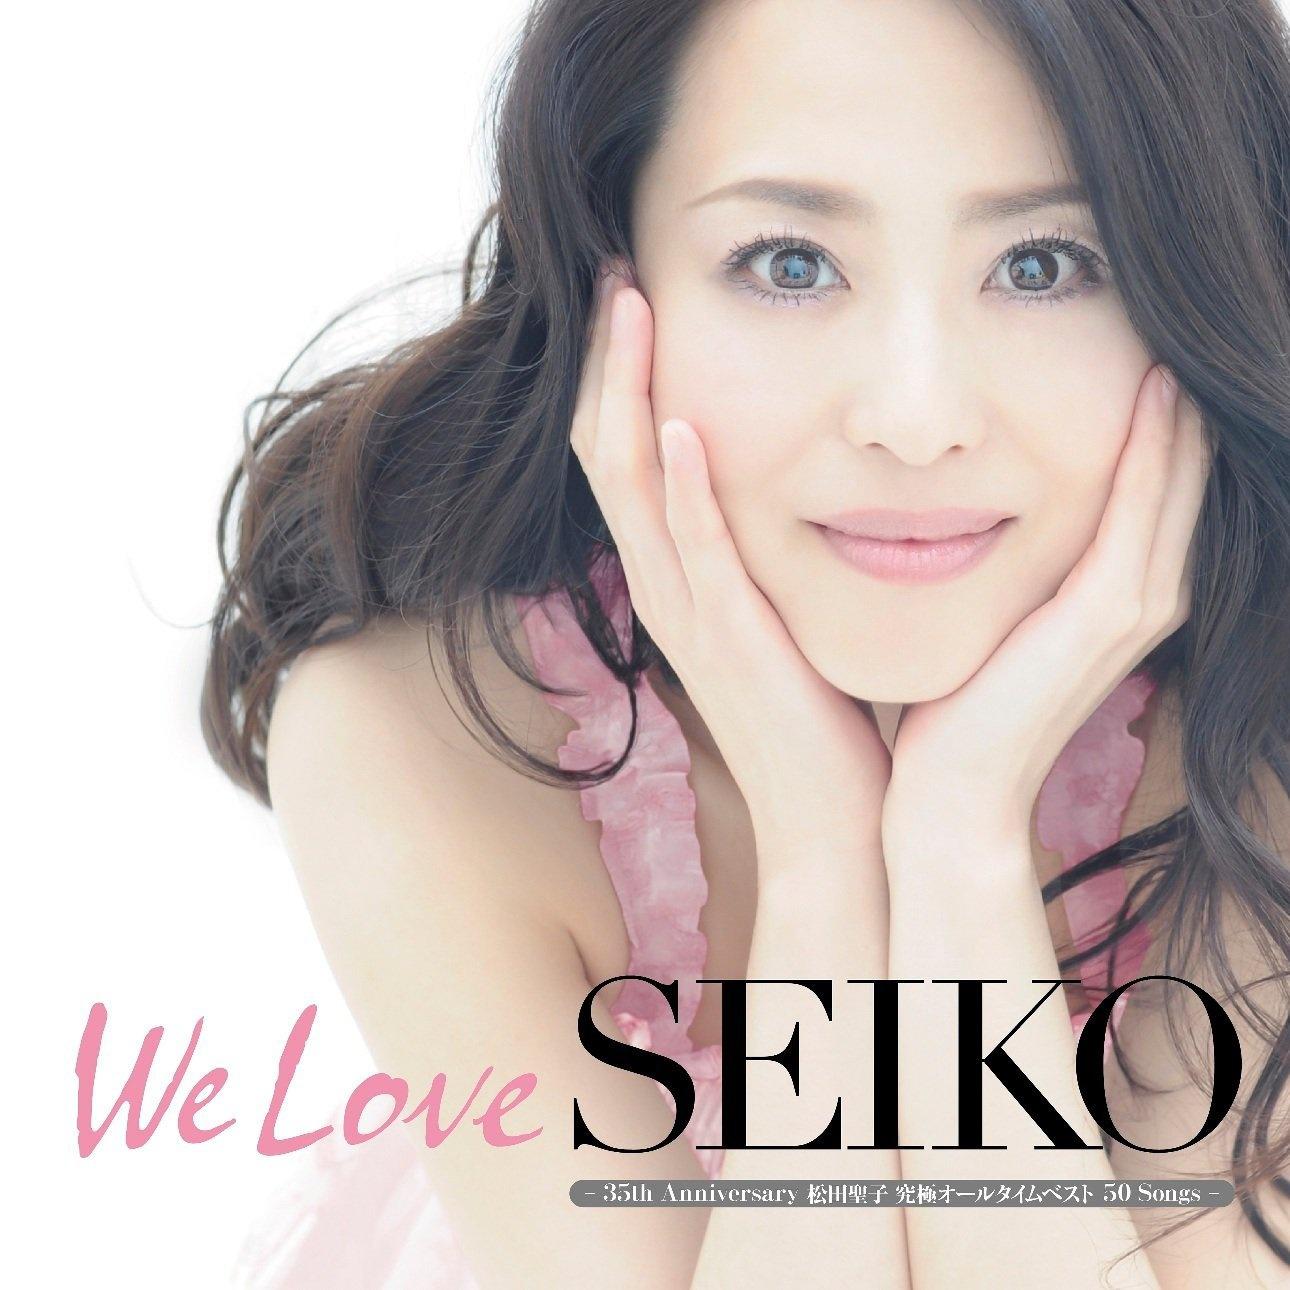 We Love SEIKO - 35th Anniversary 松田聖子 究極オールタイムベスト 50Songs -专辑